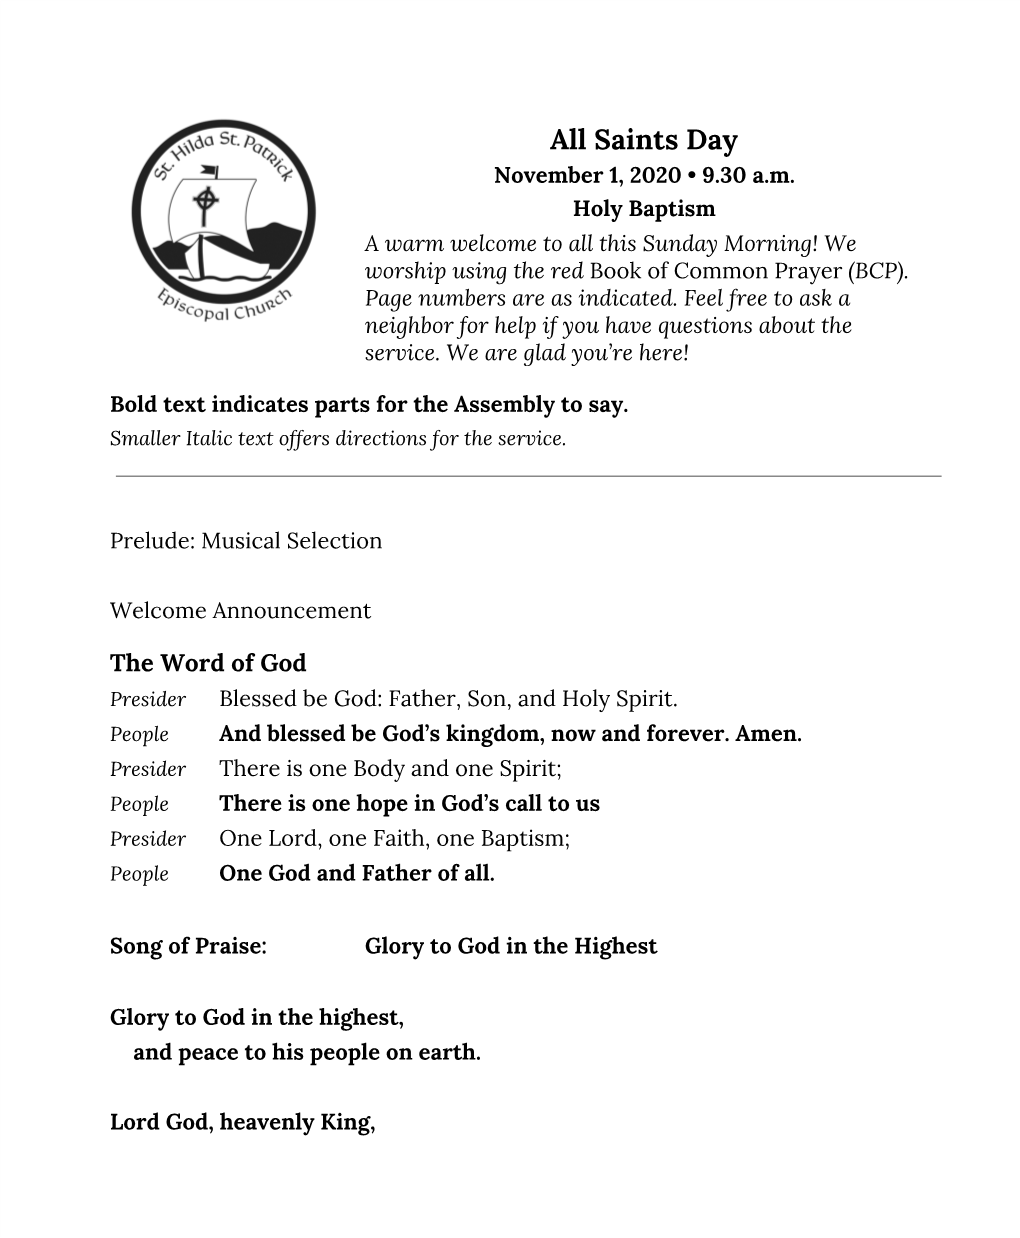 All Saints Day November 1, 2020 • 9.30 A.M